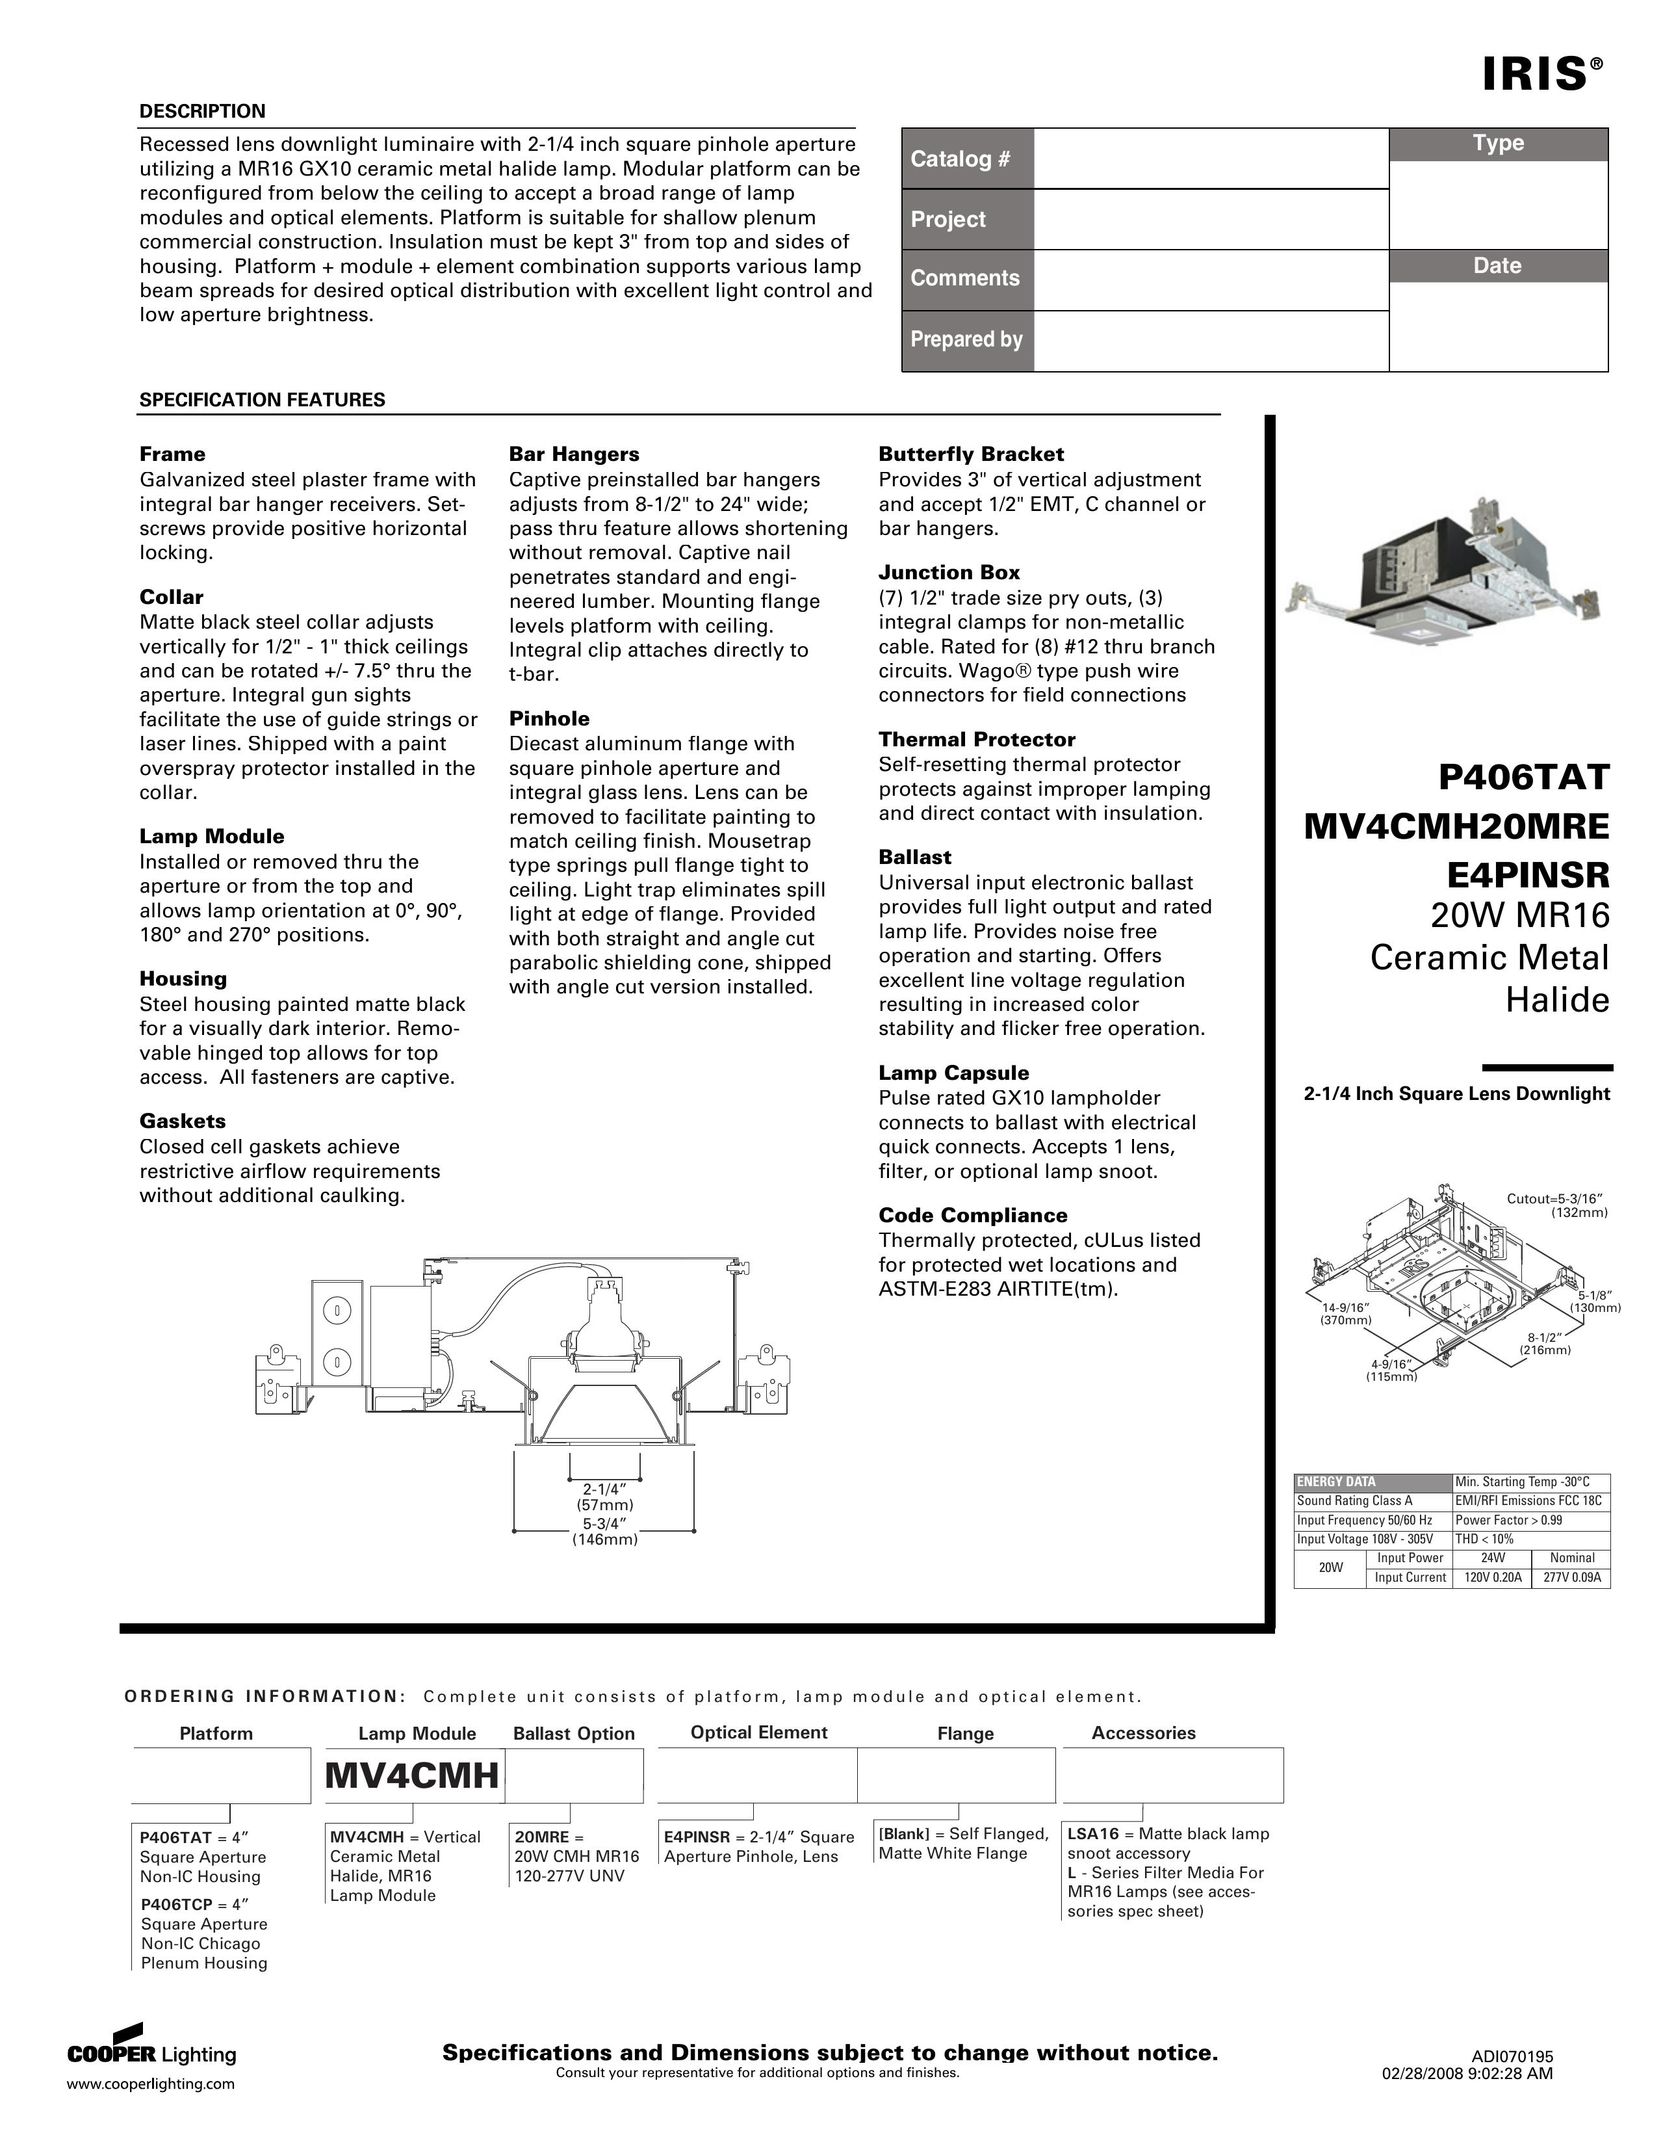 IRIS P406TAT Indoor Furnishings User Manual